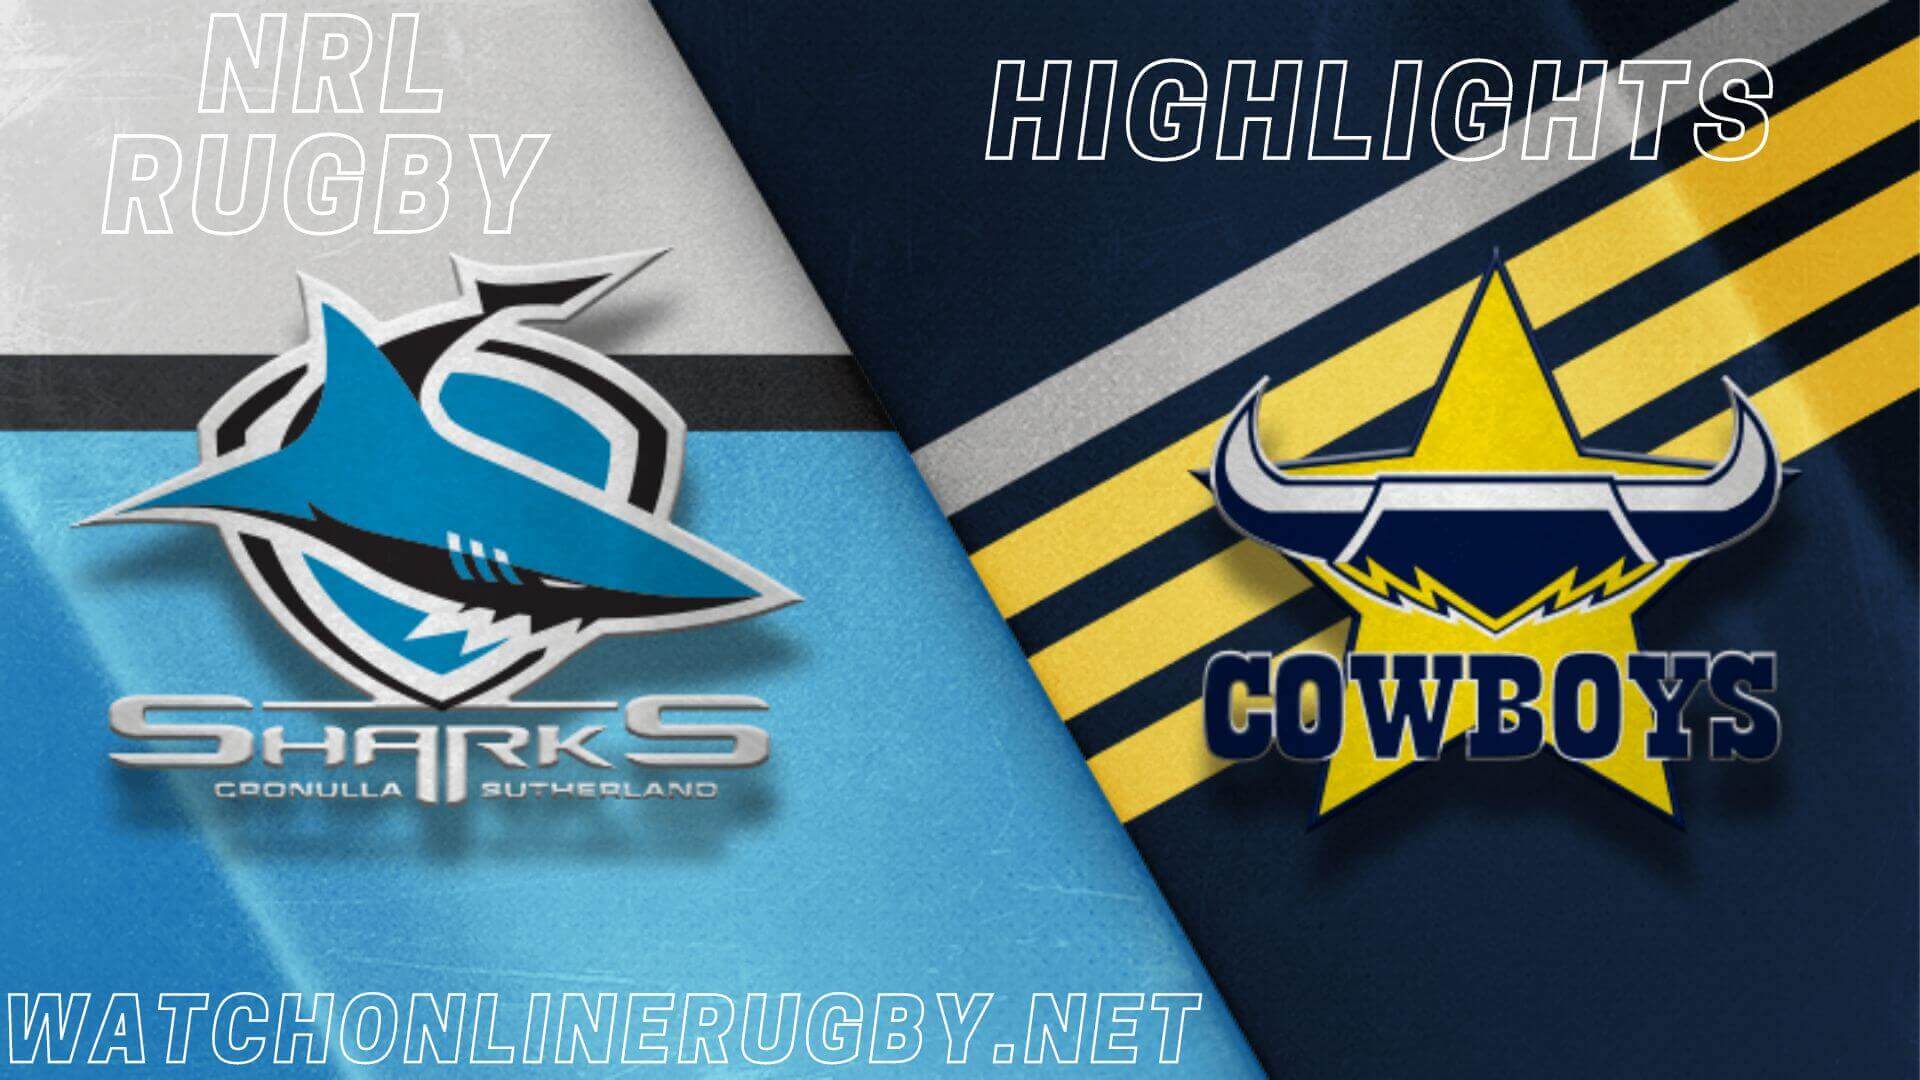 Sharks Vs Cowboys Highlights Final Week 1 NRL Rugby